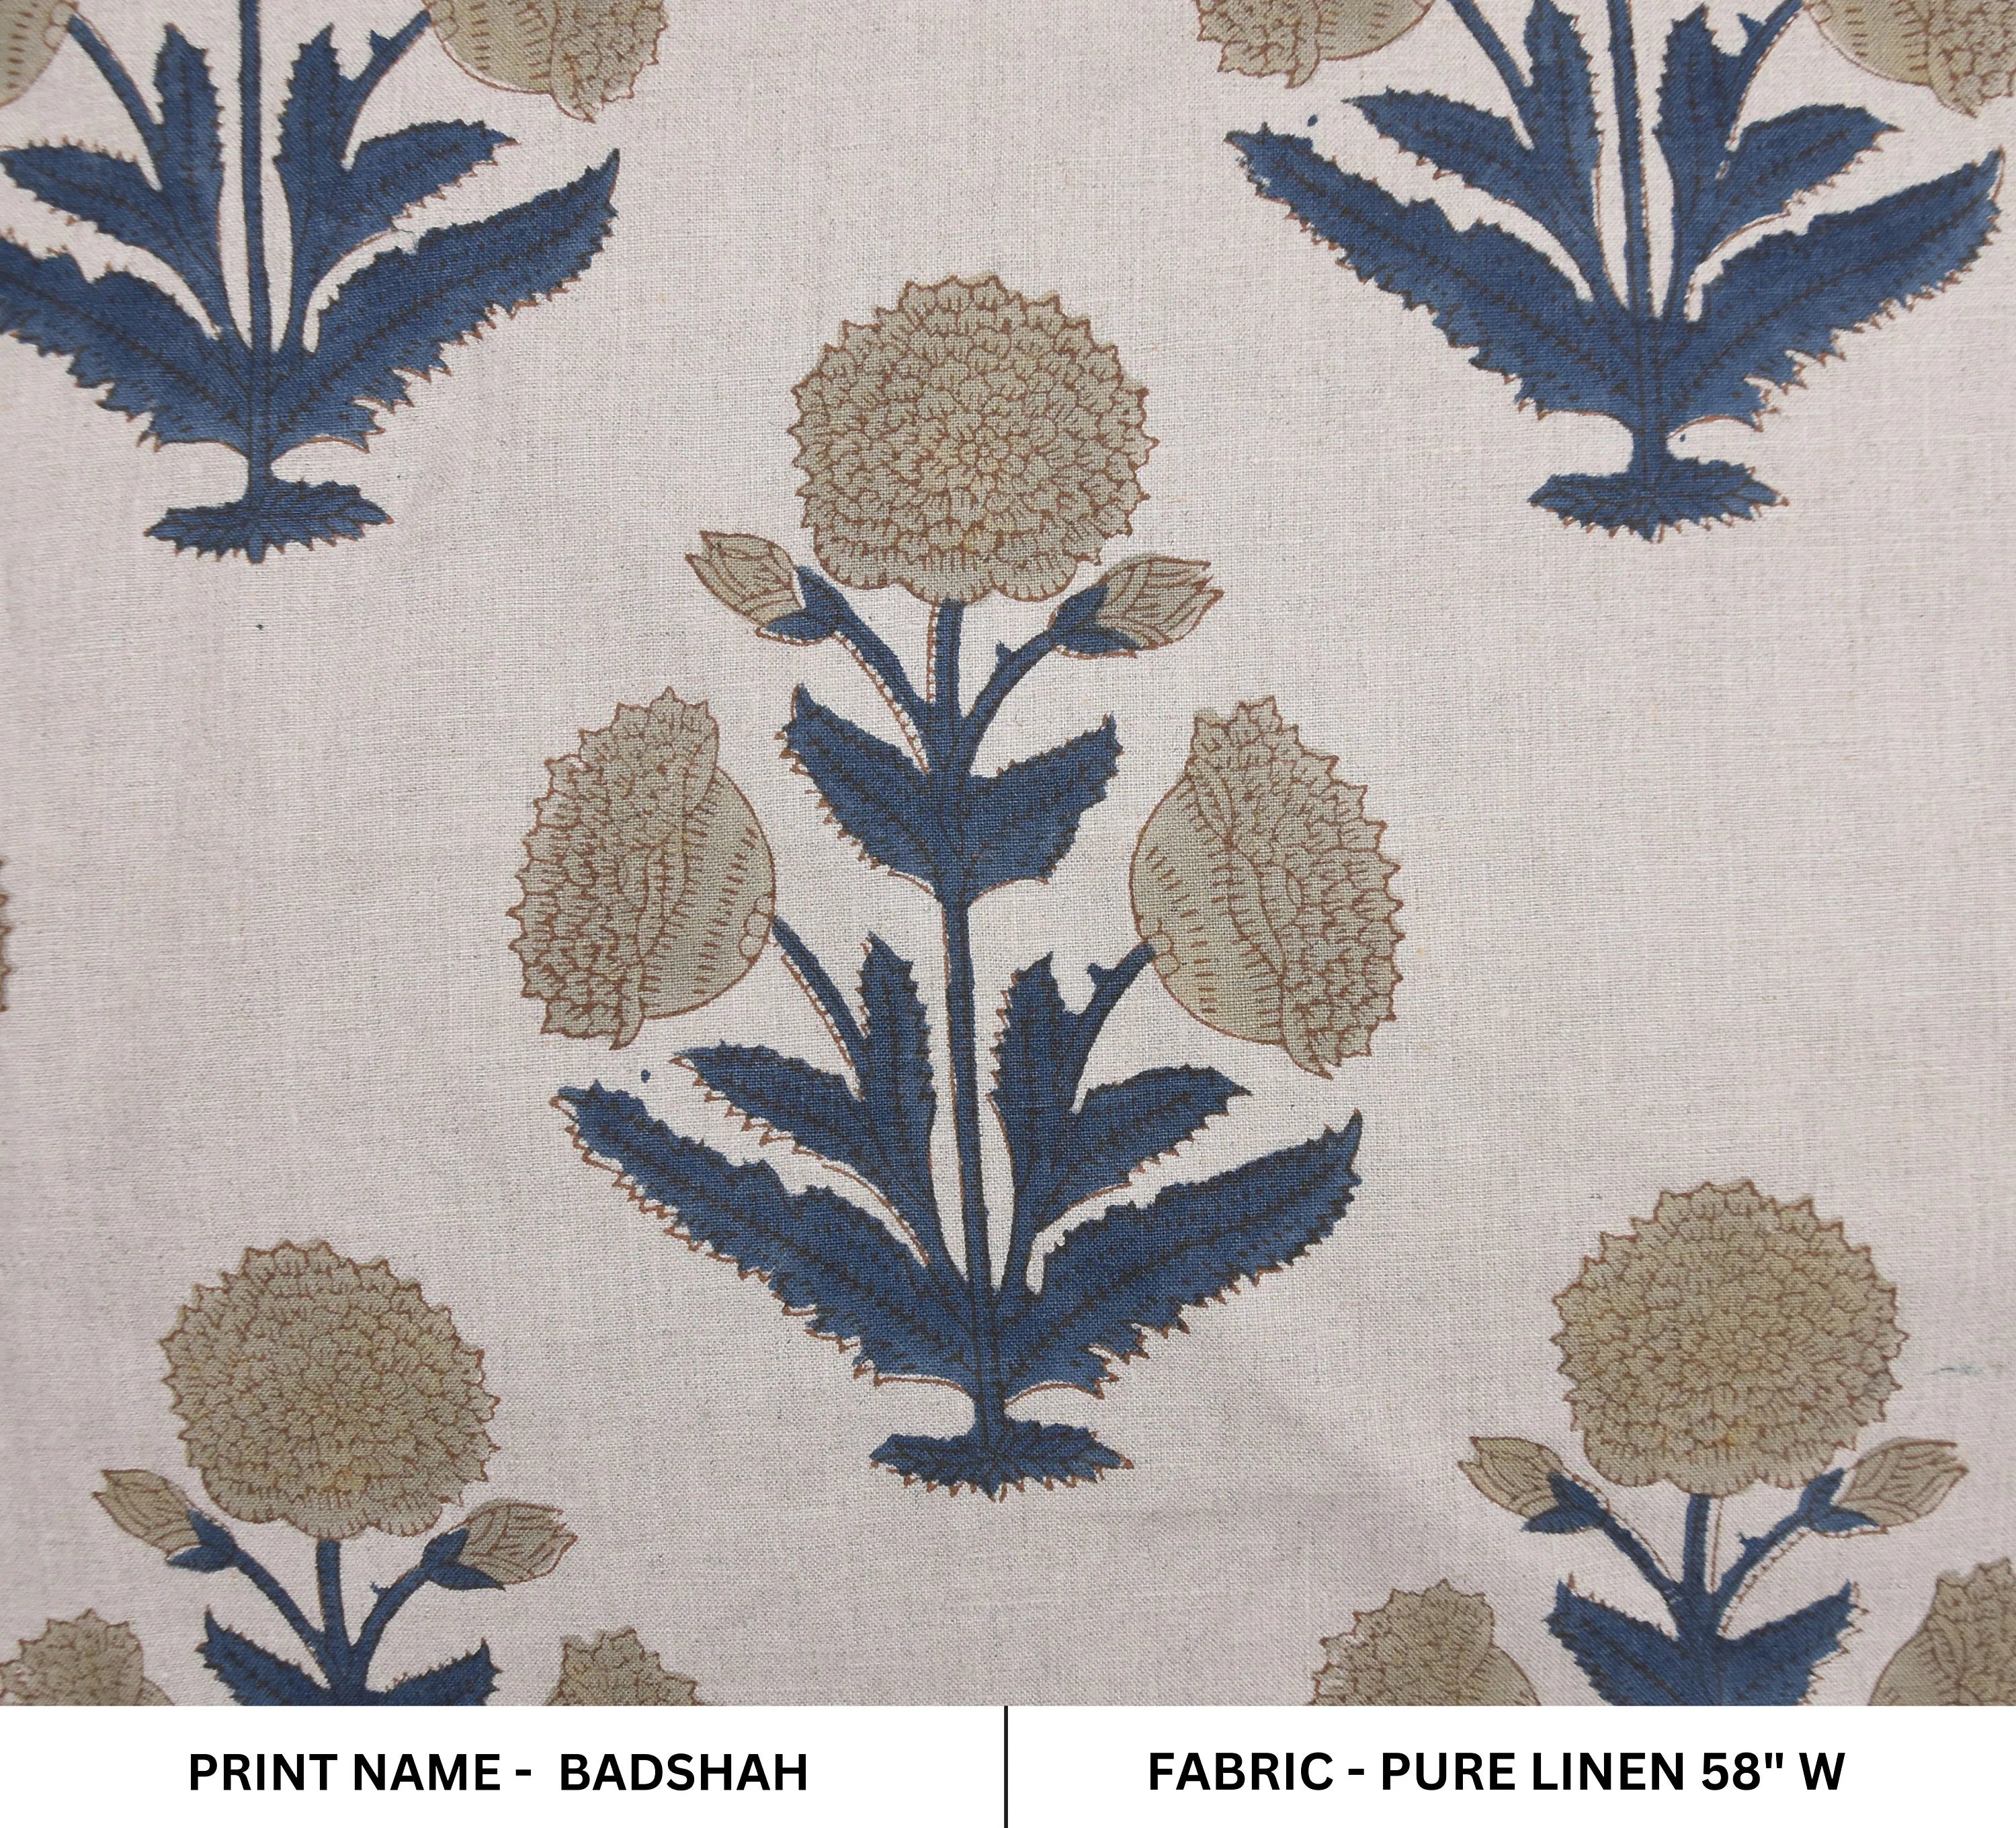 Hand block window curtains, pure linen 58" W, Indian fabric, sofa cushion fabric, home décor, traditional fabric, linen fabric - BADSHAH